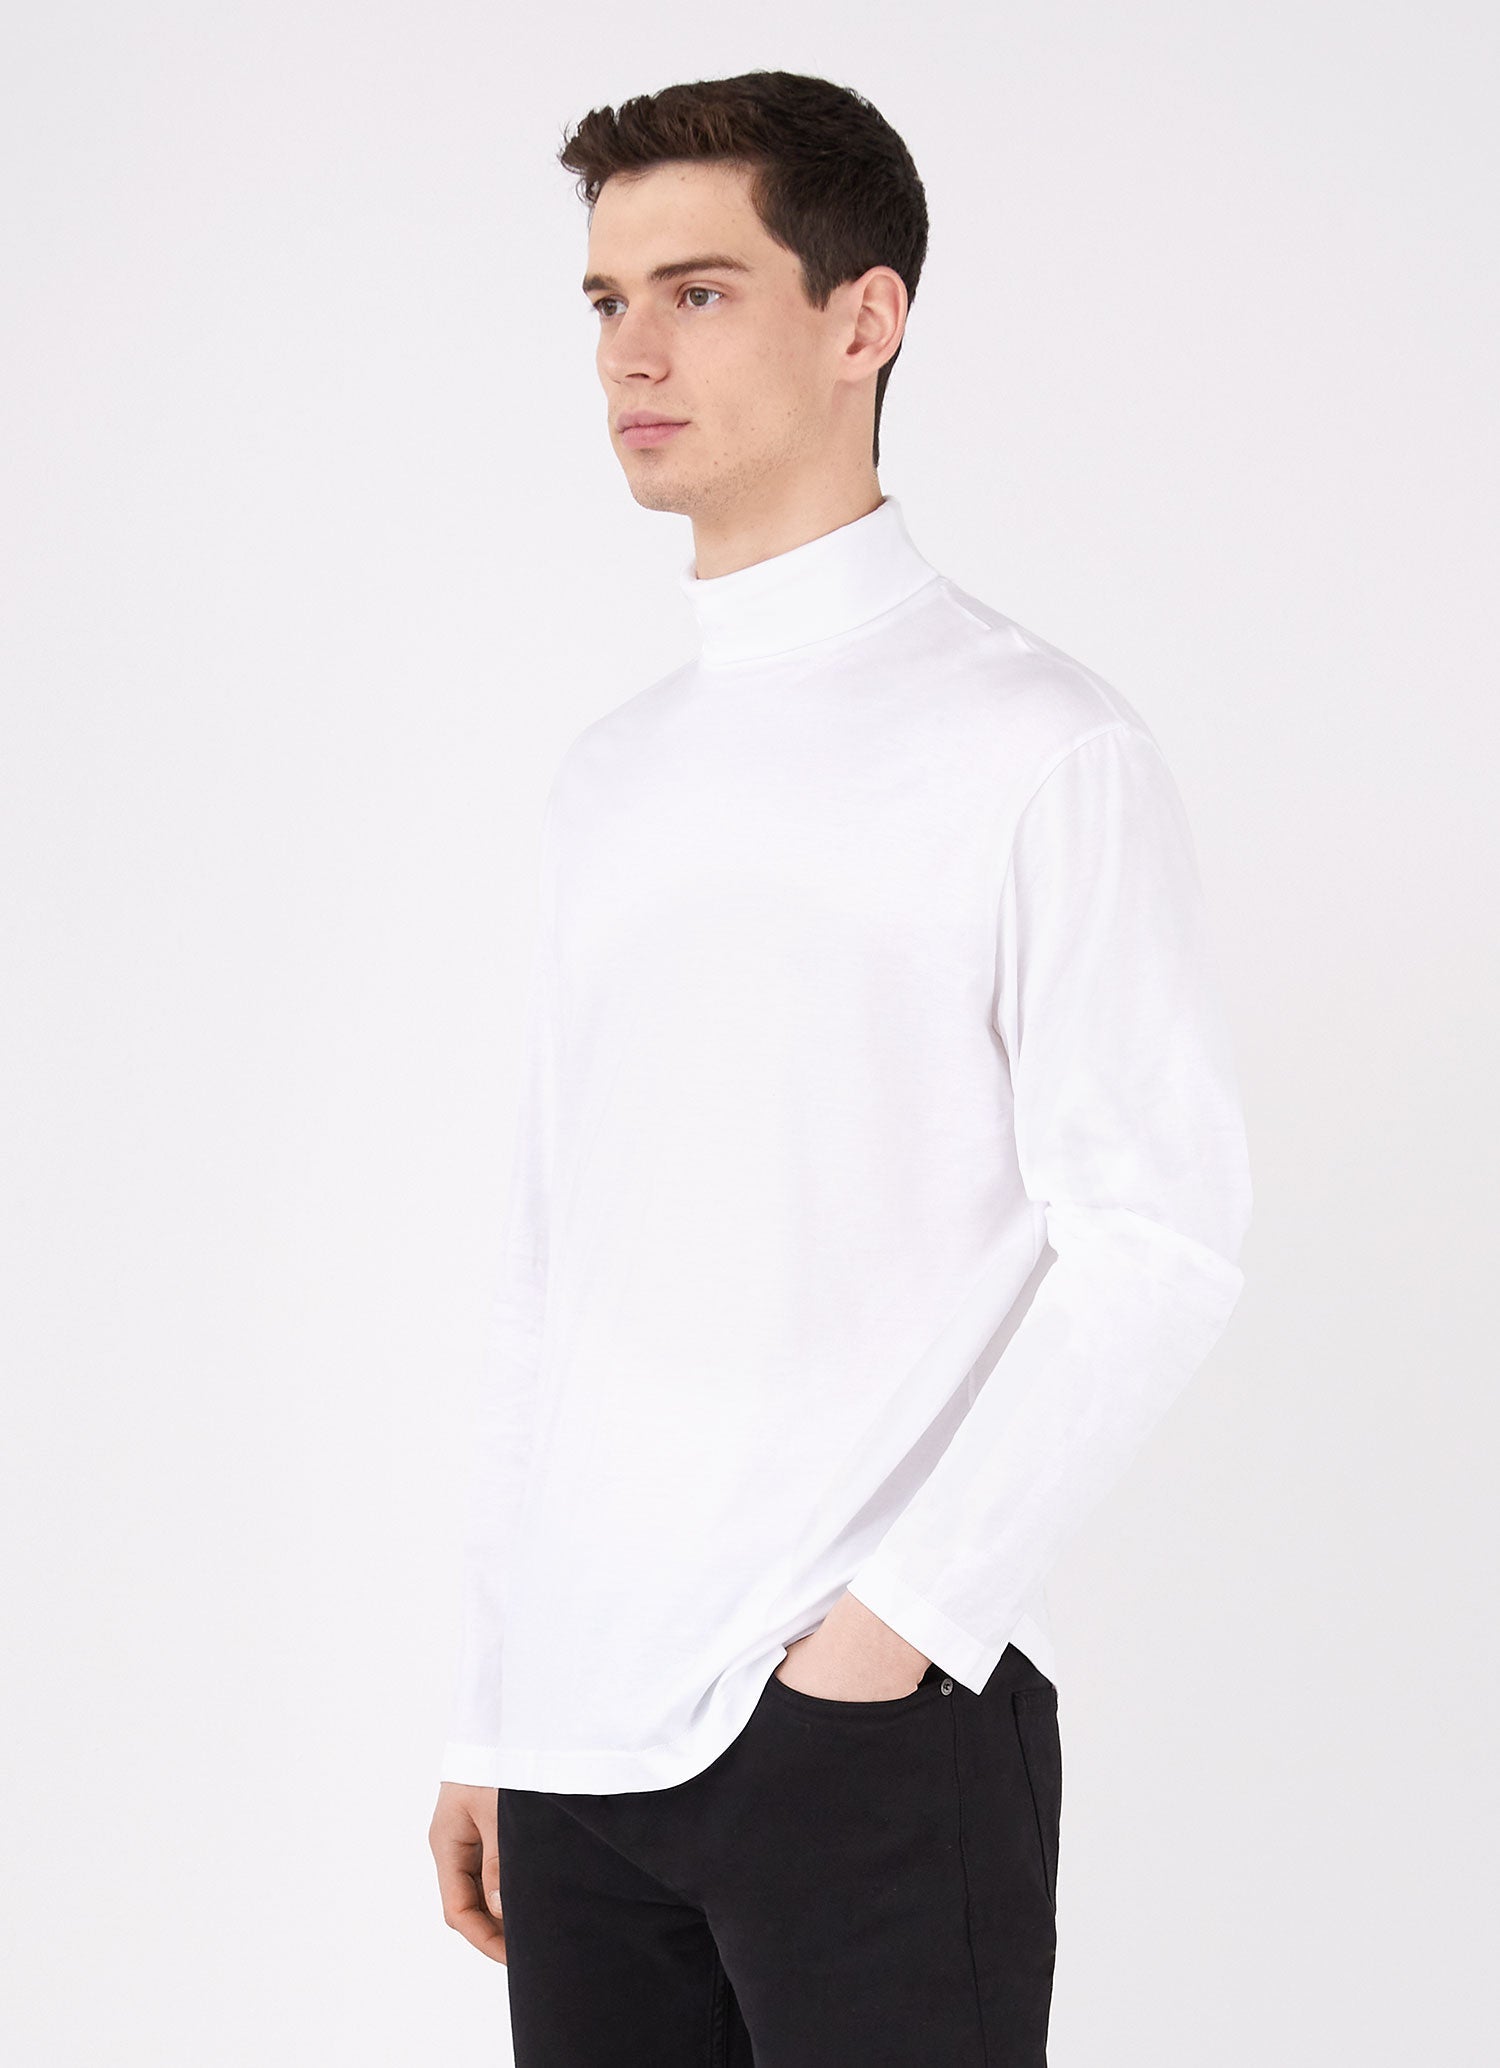 Men's Mock Neck Heavyweight T-shirt in White | Sunspel